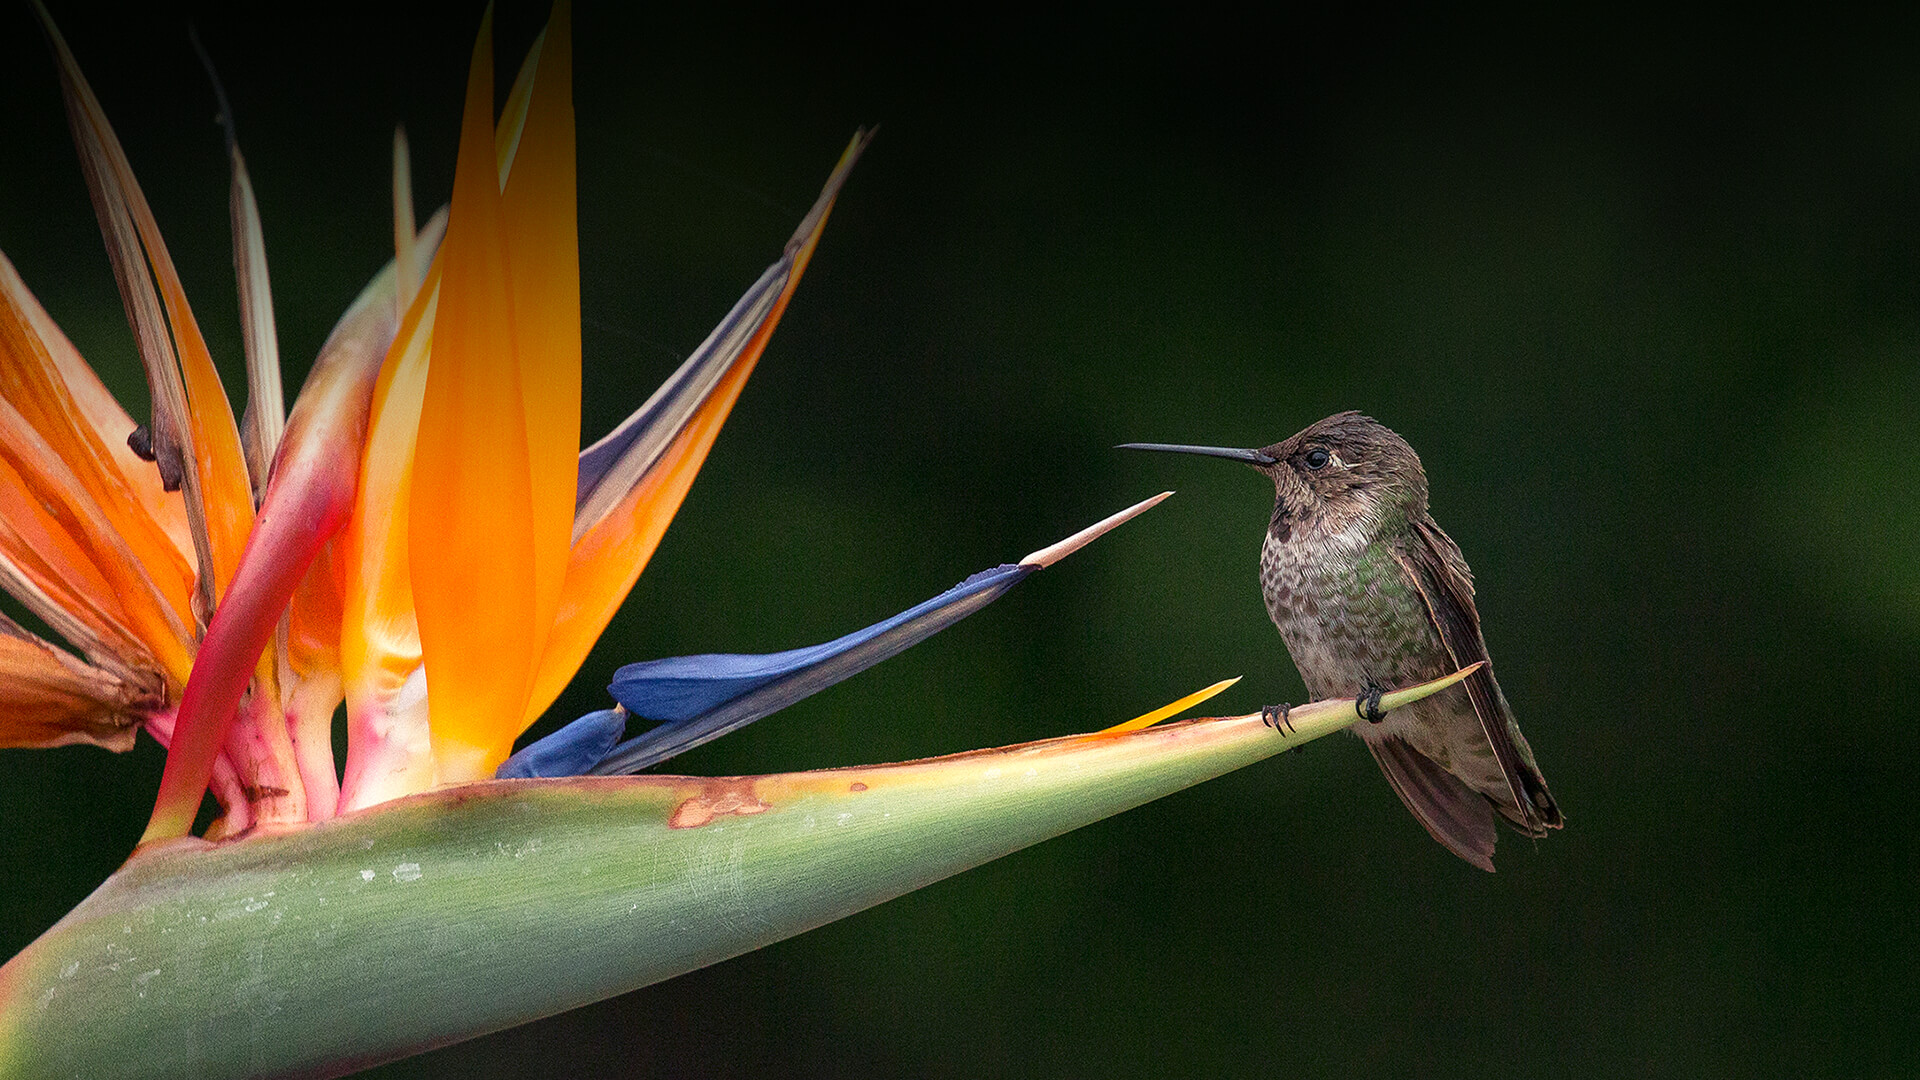 Hummingbird sitting on a bird-of-paradise flower